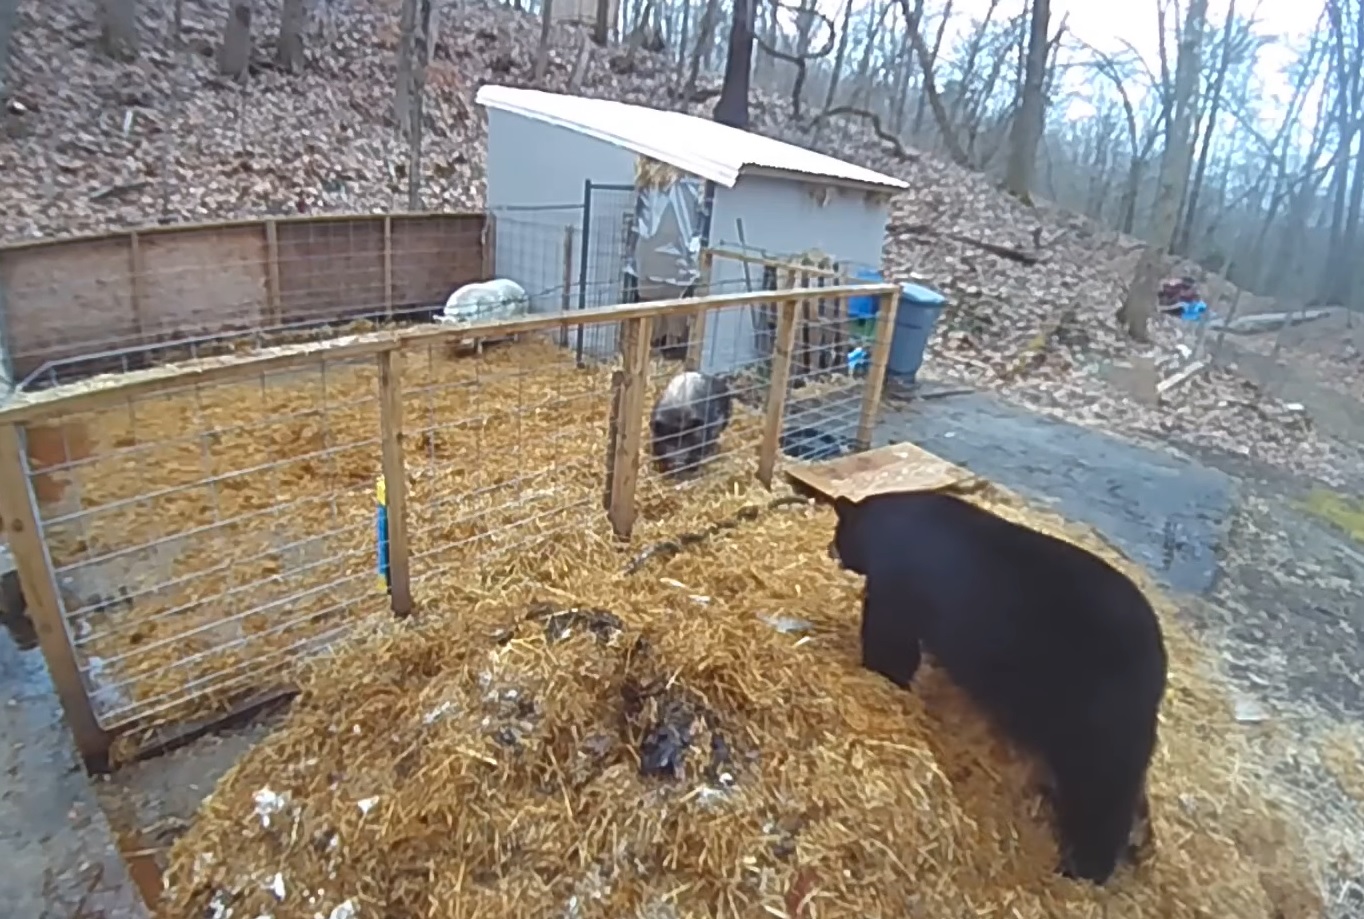 Two Pigs Vs Bear Video